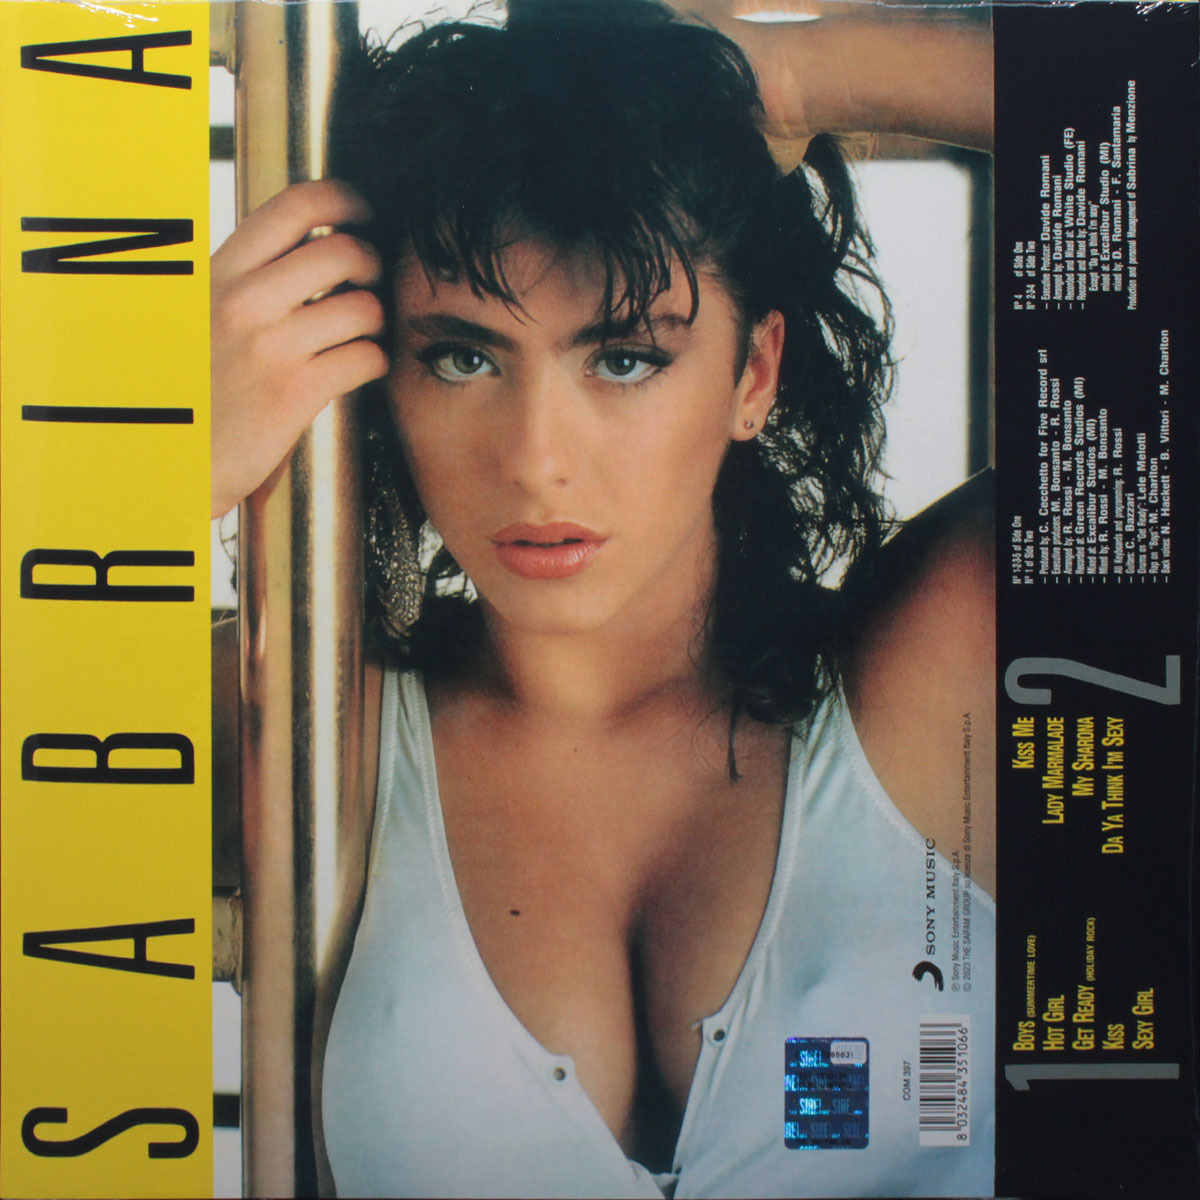 Sabrina - Sabrina [Yellow Vinyl] (8032484351066)